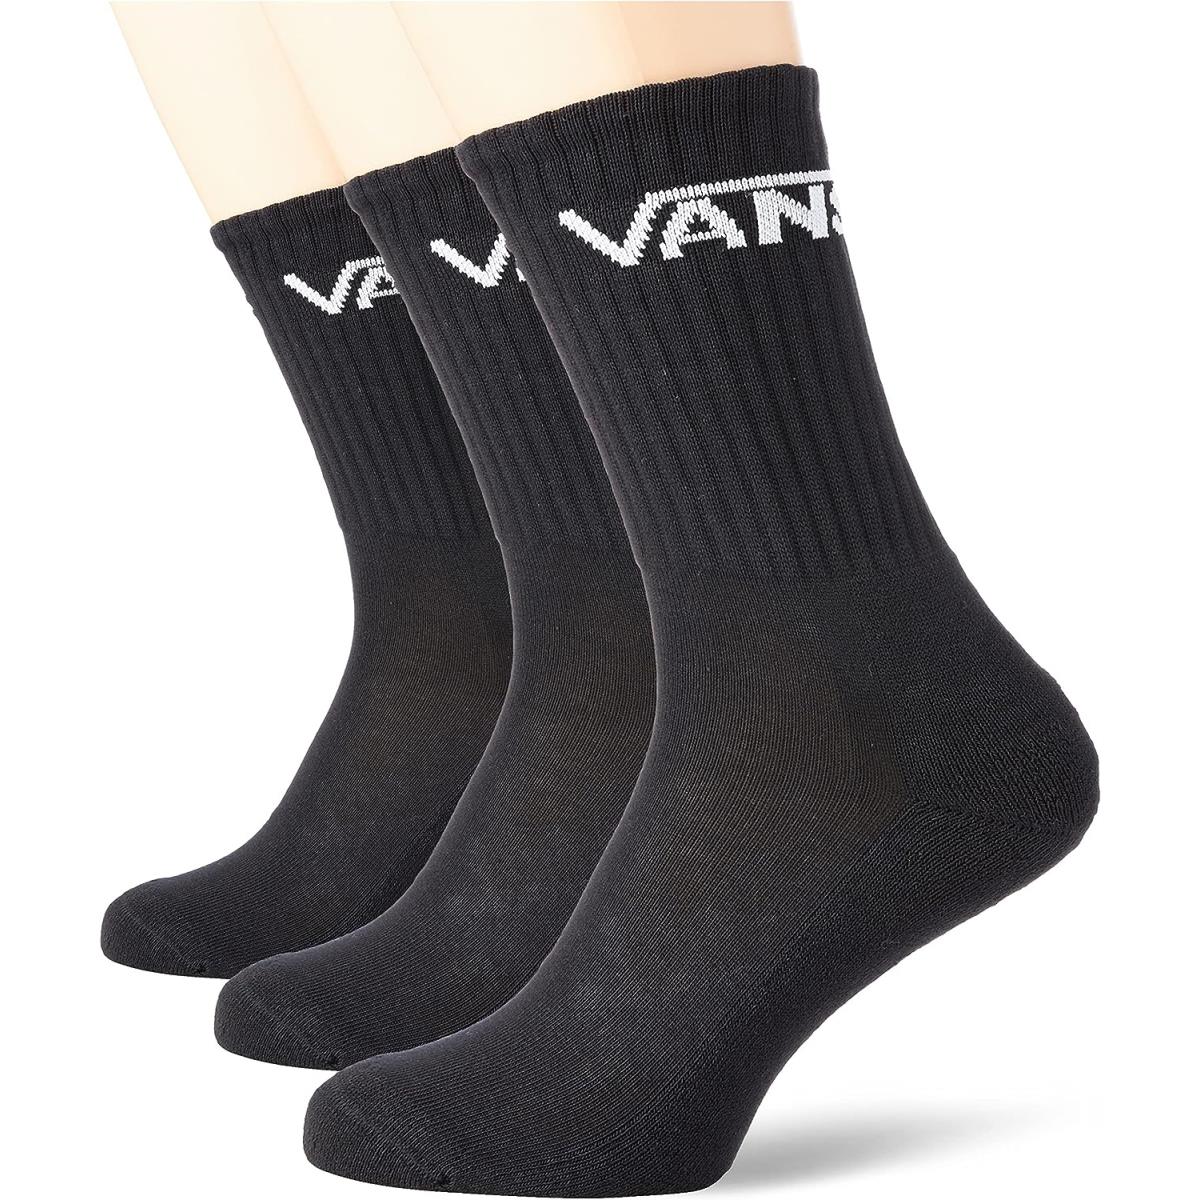 Vans Classic Crew Socks Black